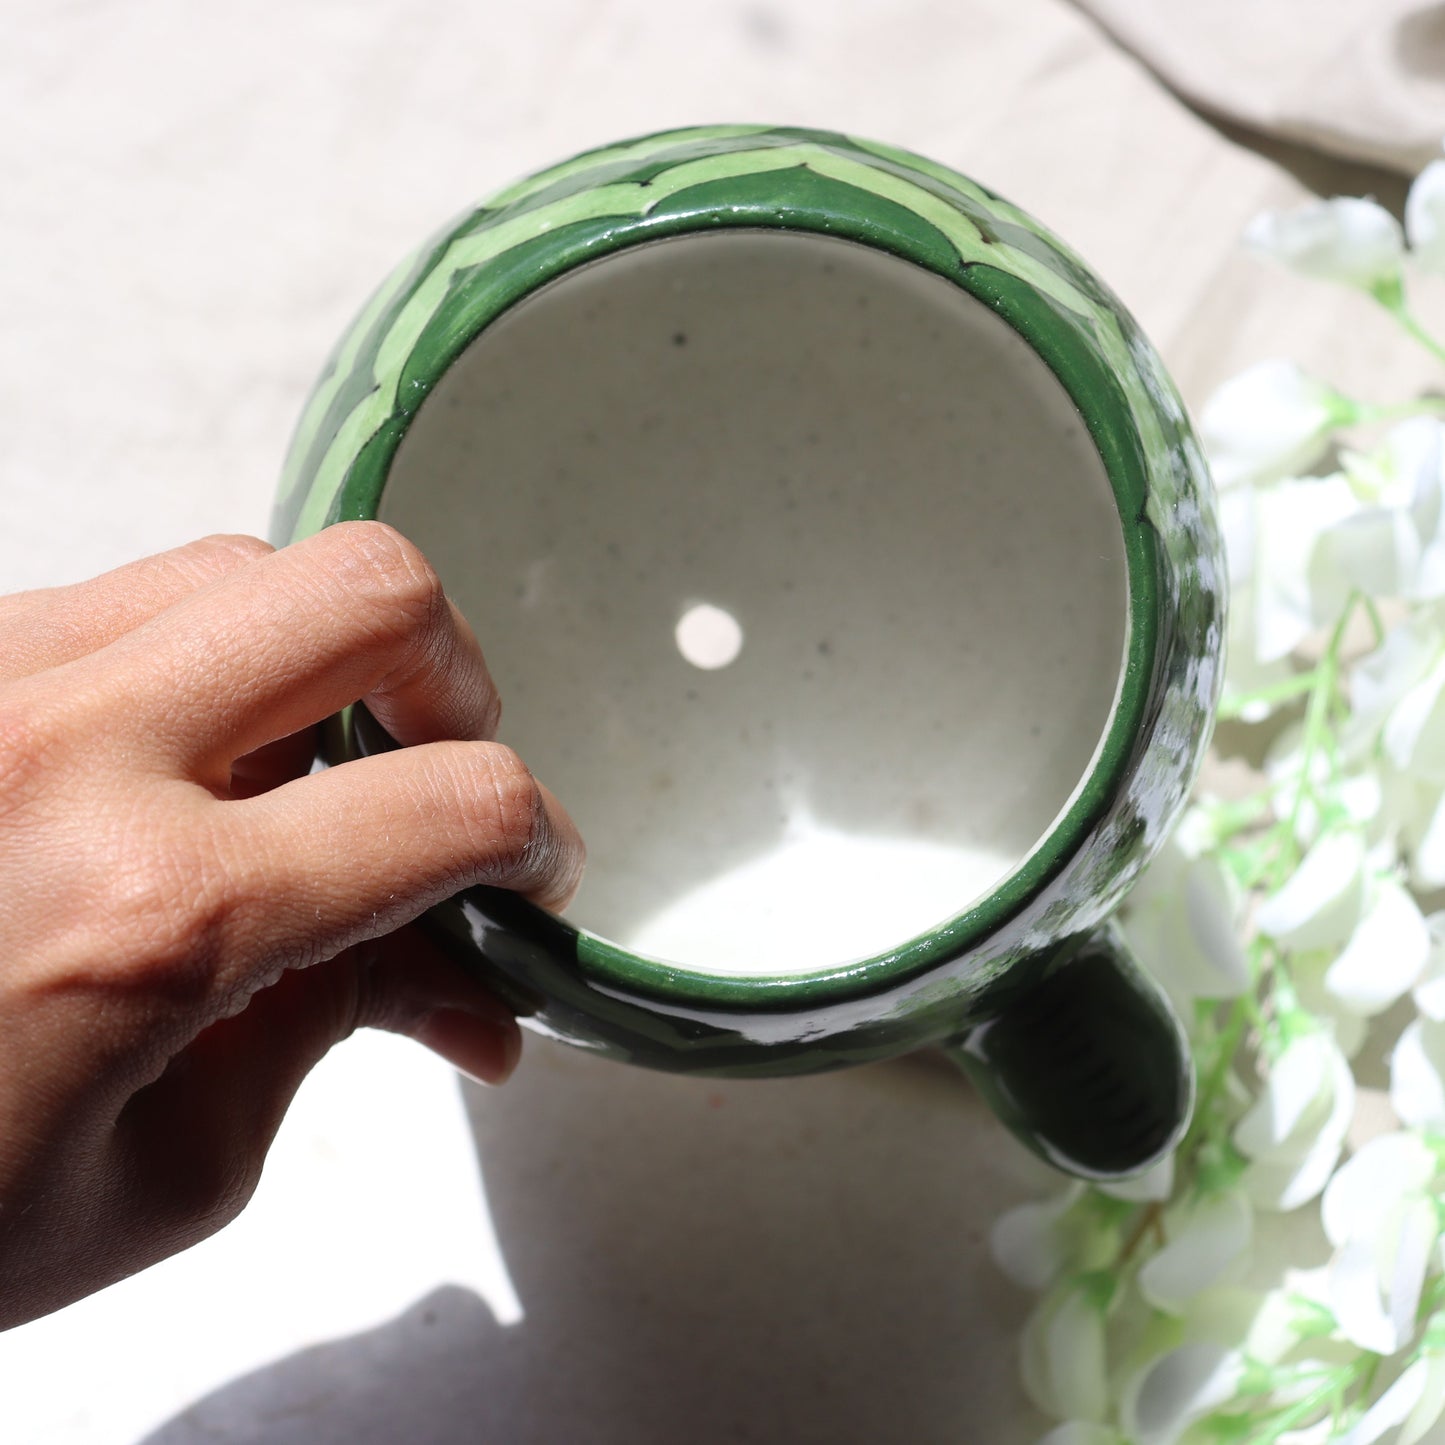 Handmade Pottery Turtle Planter Pot - Green Colour with Drainage - Aksa Home Decor 